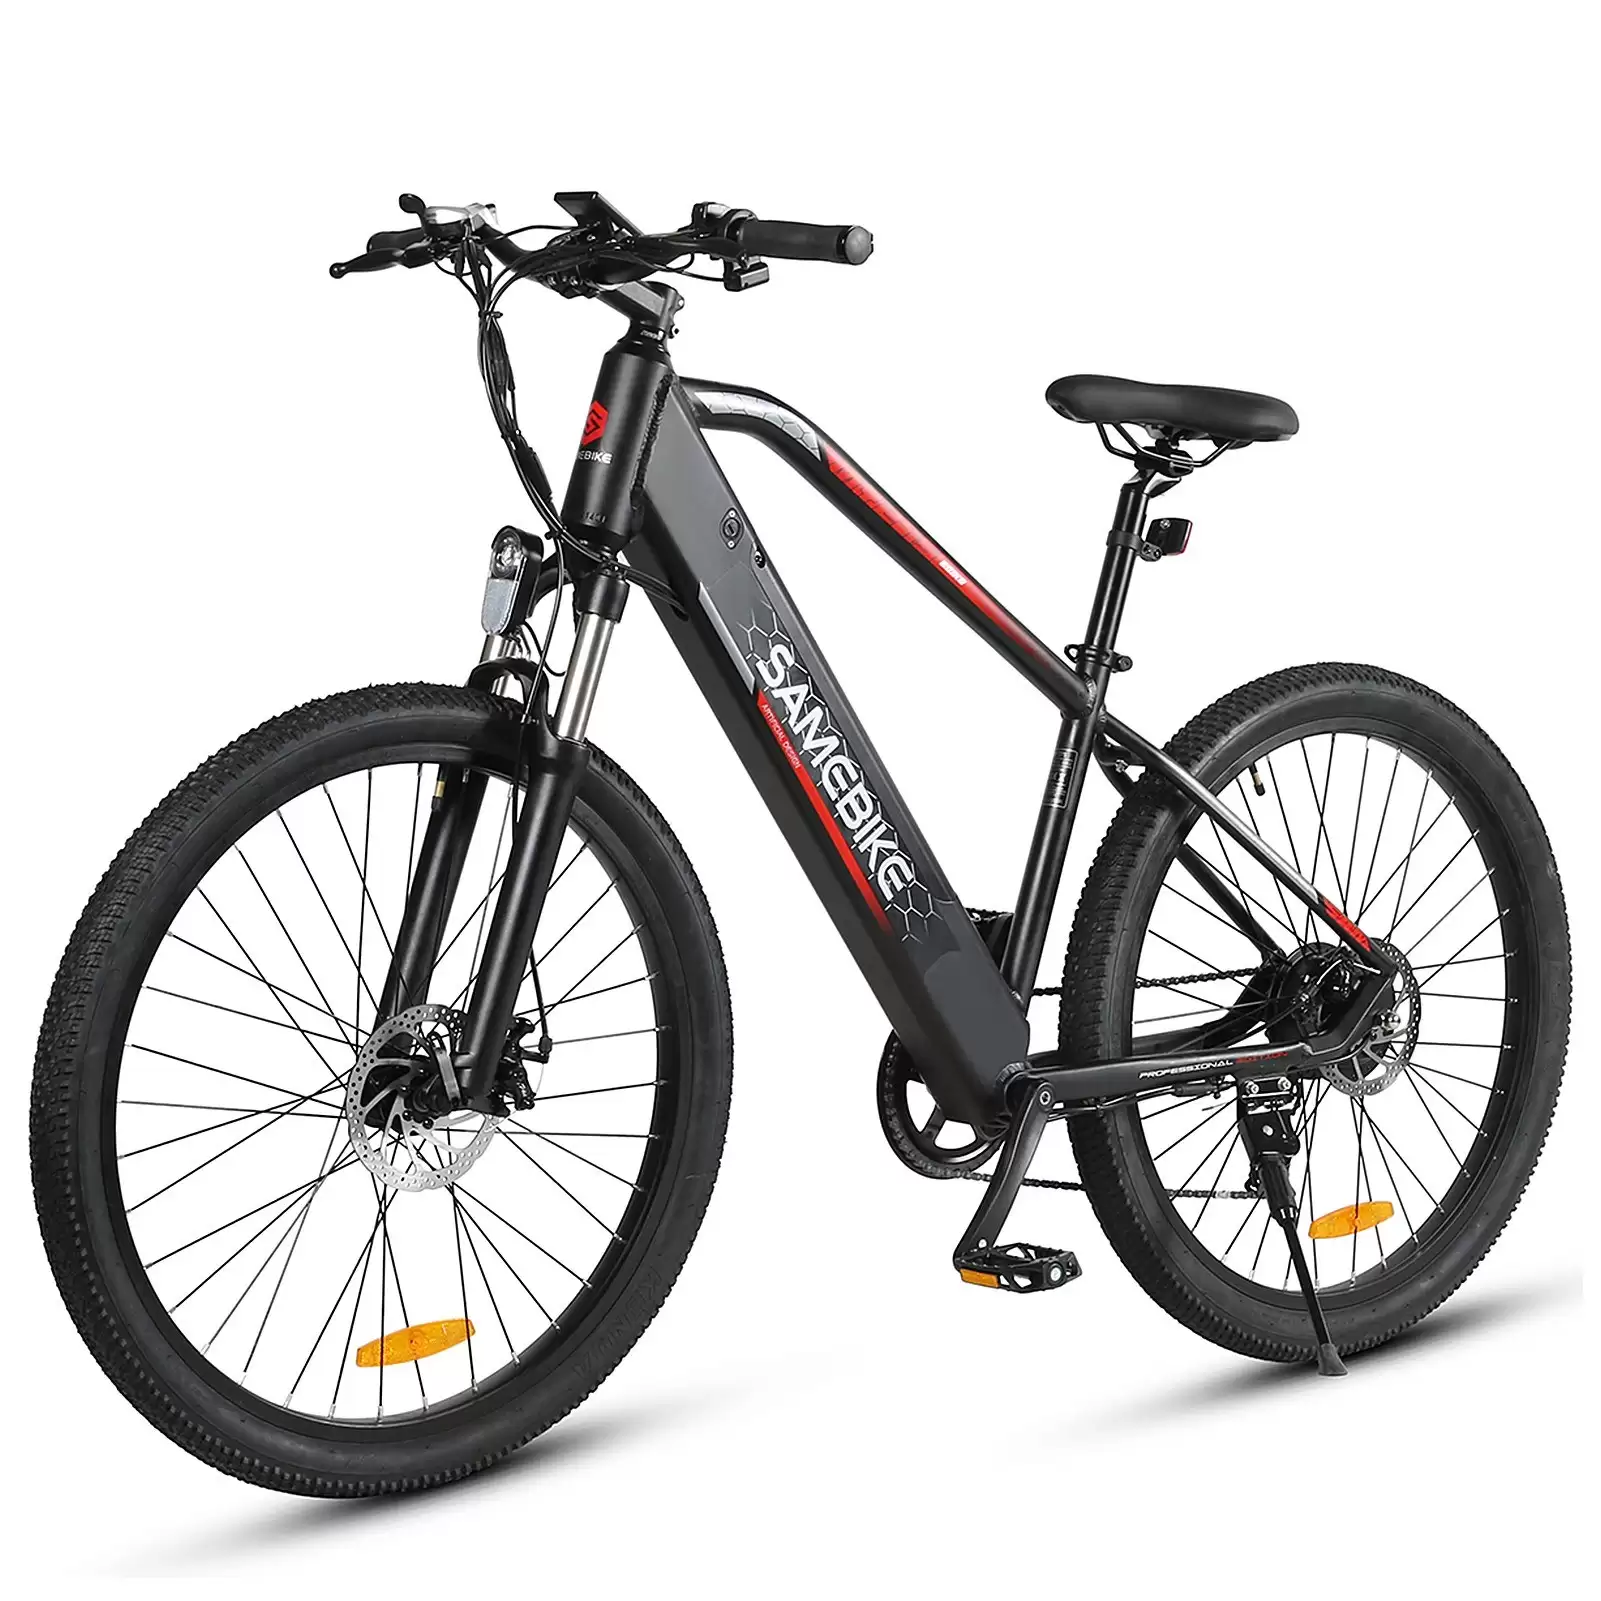 Pay Only $839 Samebike My-275 E-Bike 27.5inch 500w Motor Power Assist Electric Bike 80-100km Range At Tomtop